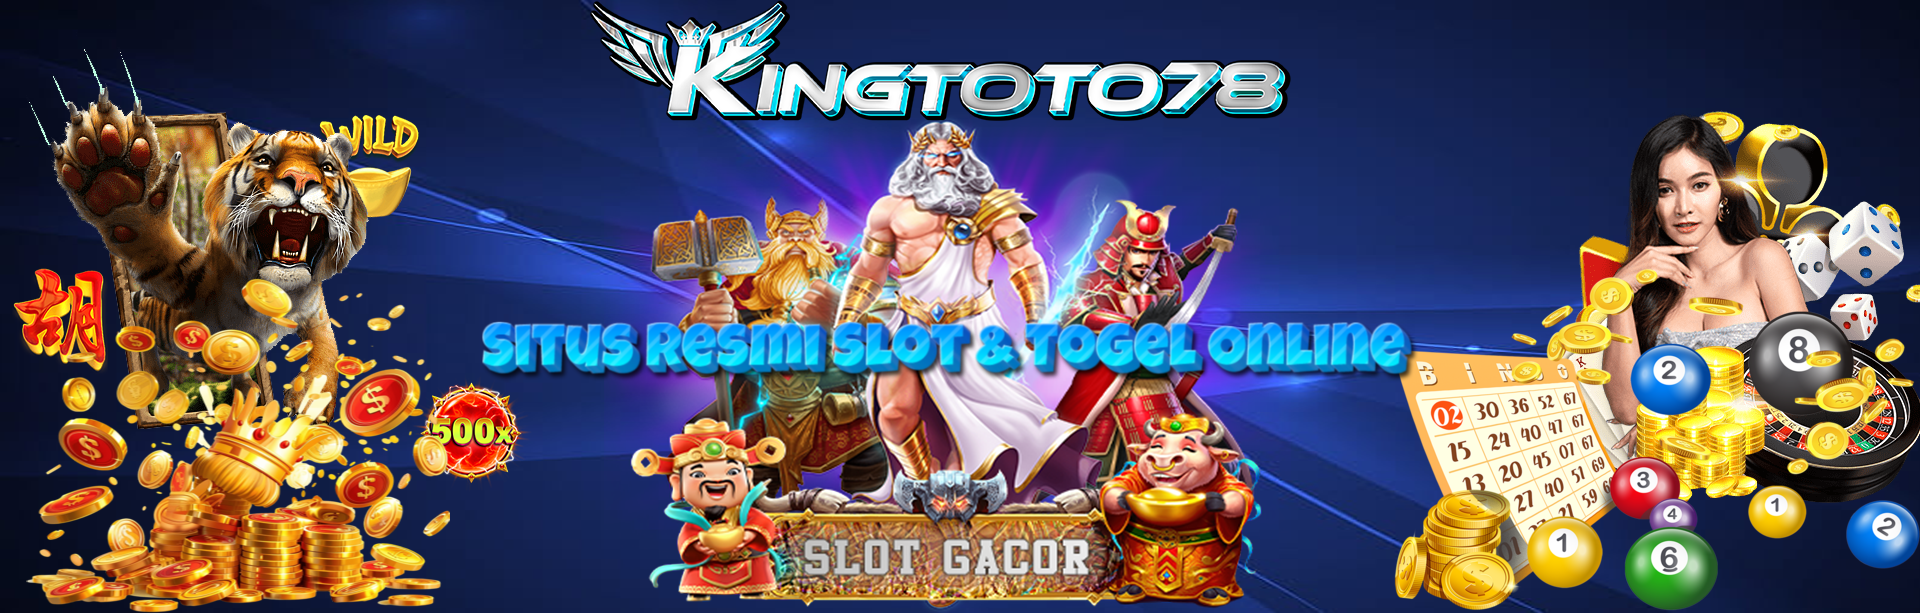 Kingtoto78 - Pusat Login & Daftar Situs Resmi Kingtoto 78 Mudah Maxwin